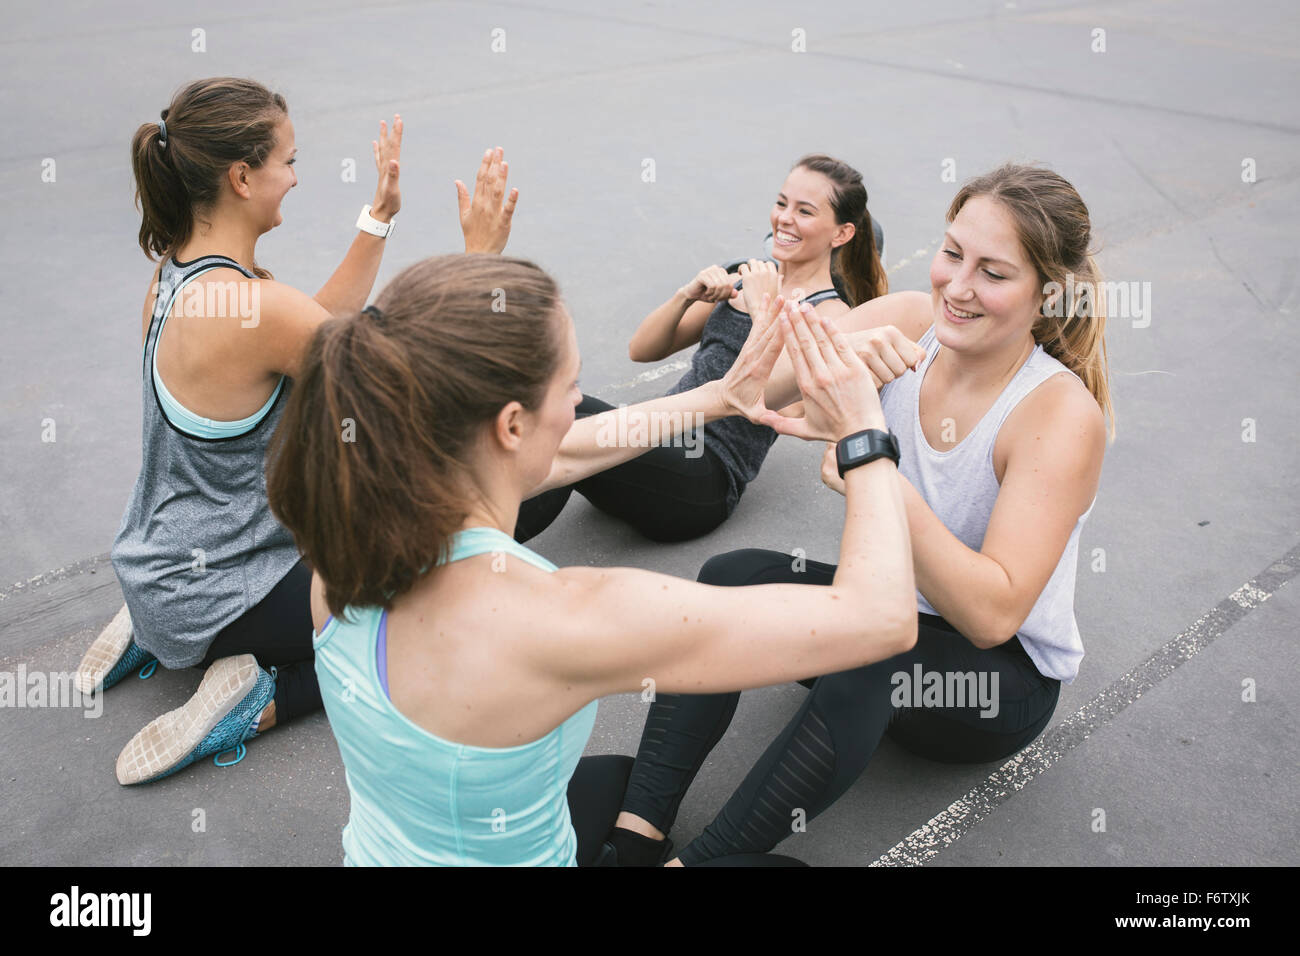 Four women having an outdoor boot camp workout Stock Photo